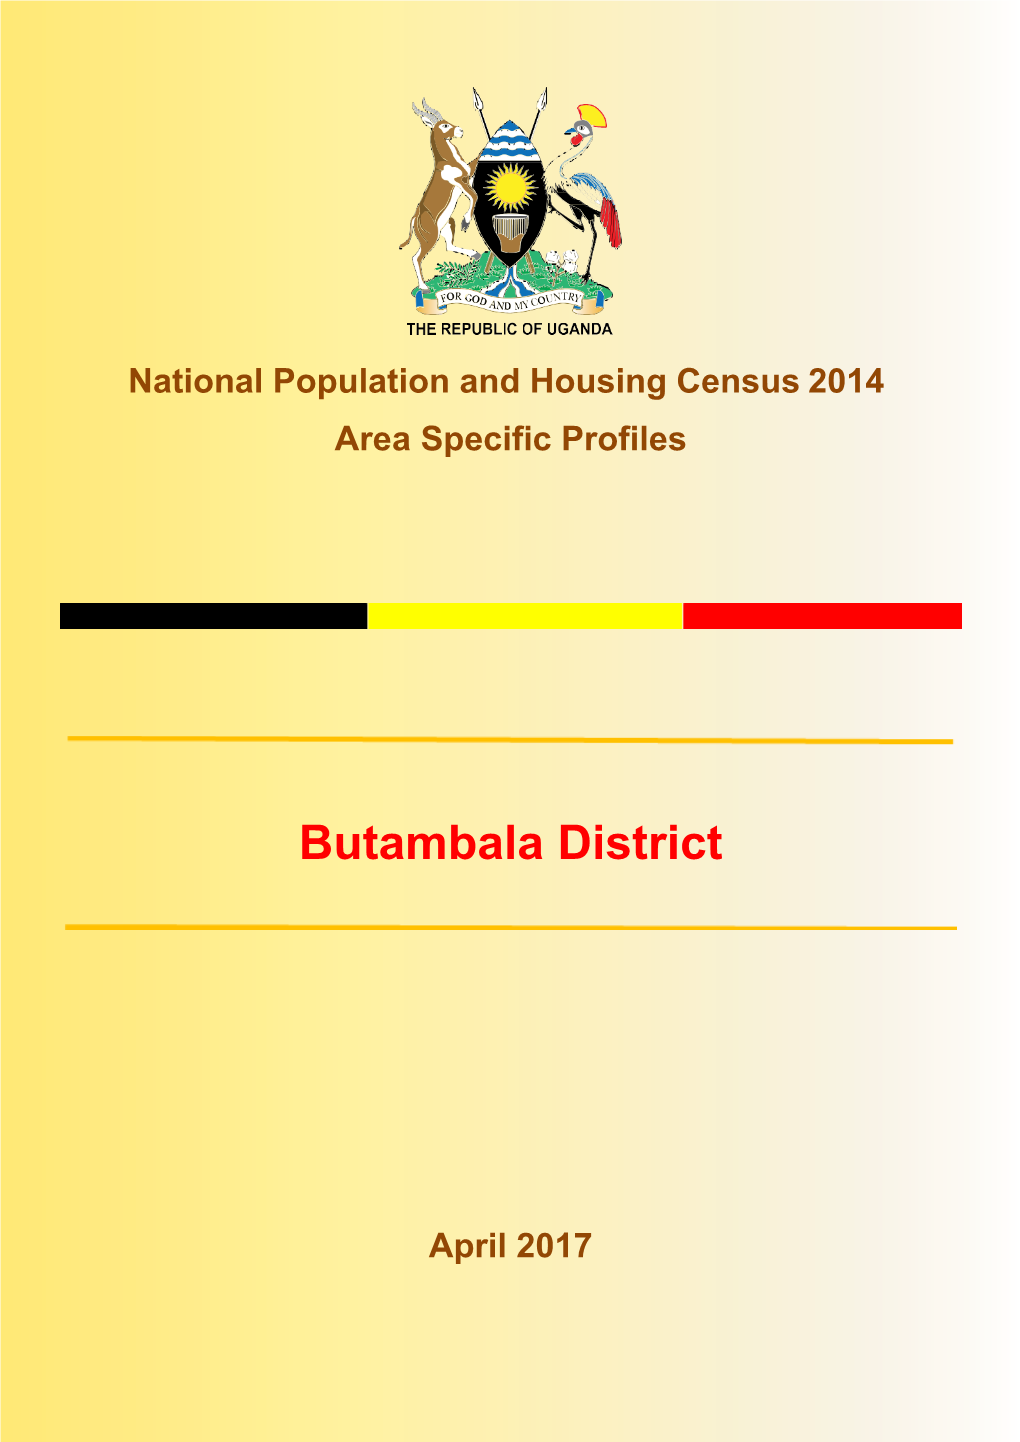 Butambala District